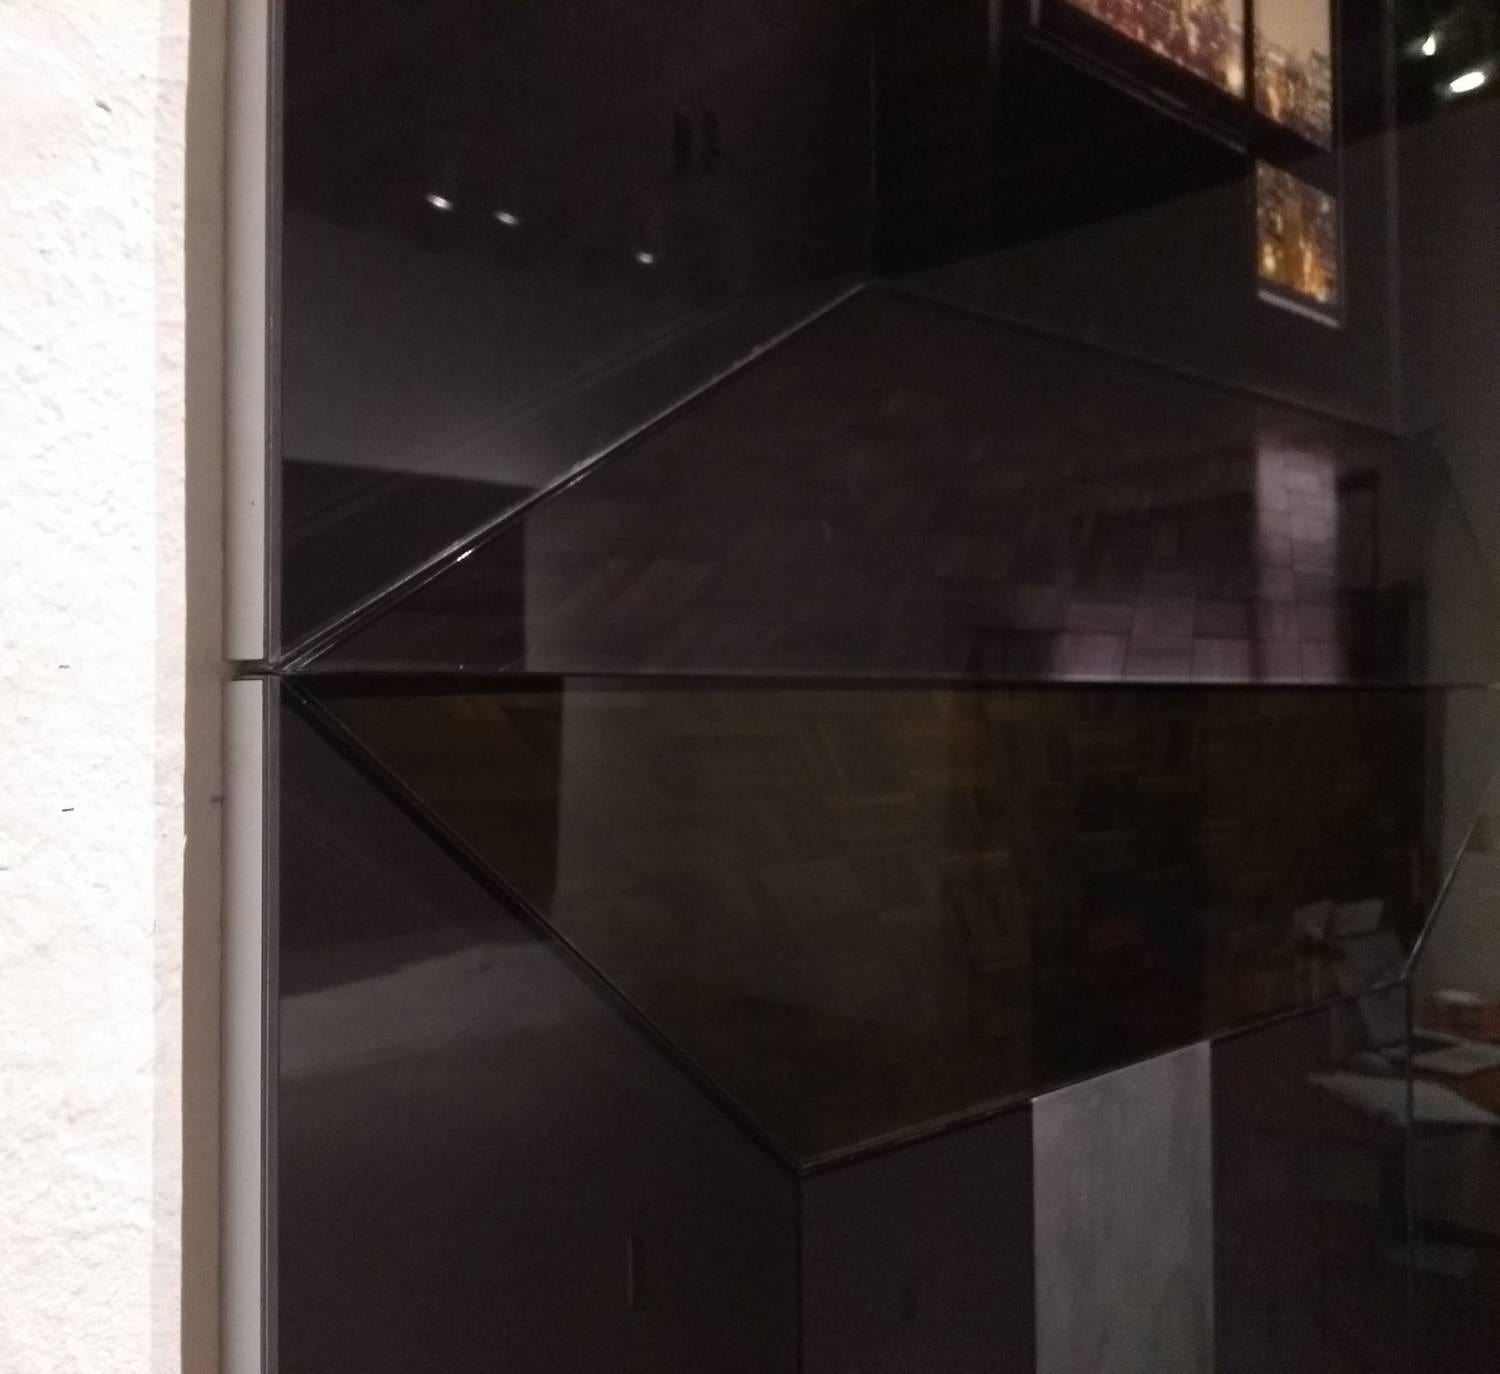 Cuarto Oscuro (espejo) - Abstract Geometric Art by Alberto Montaño Mason